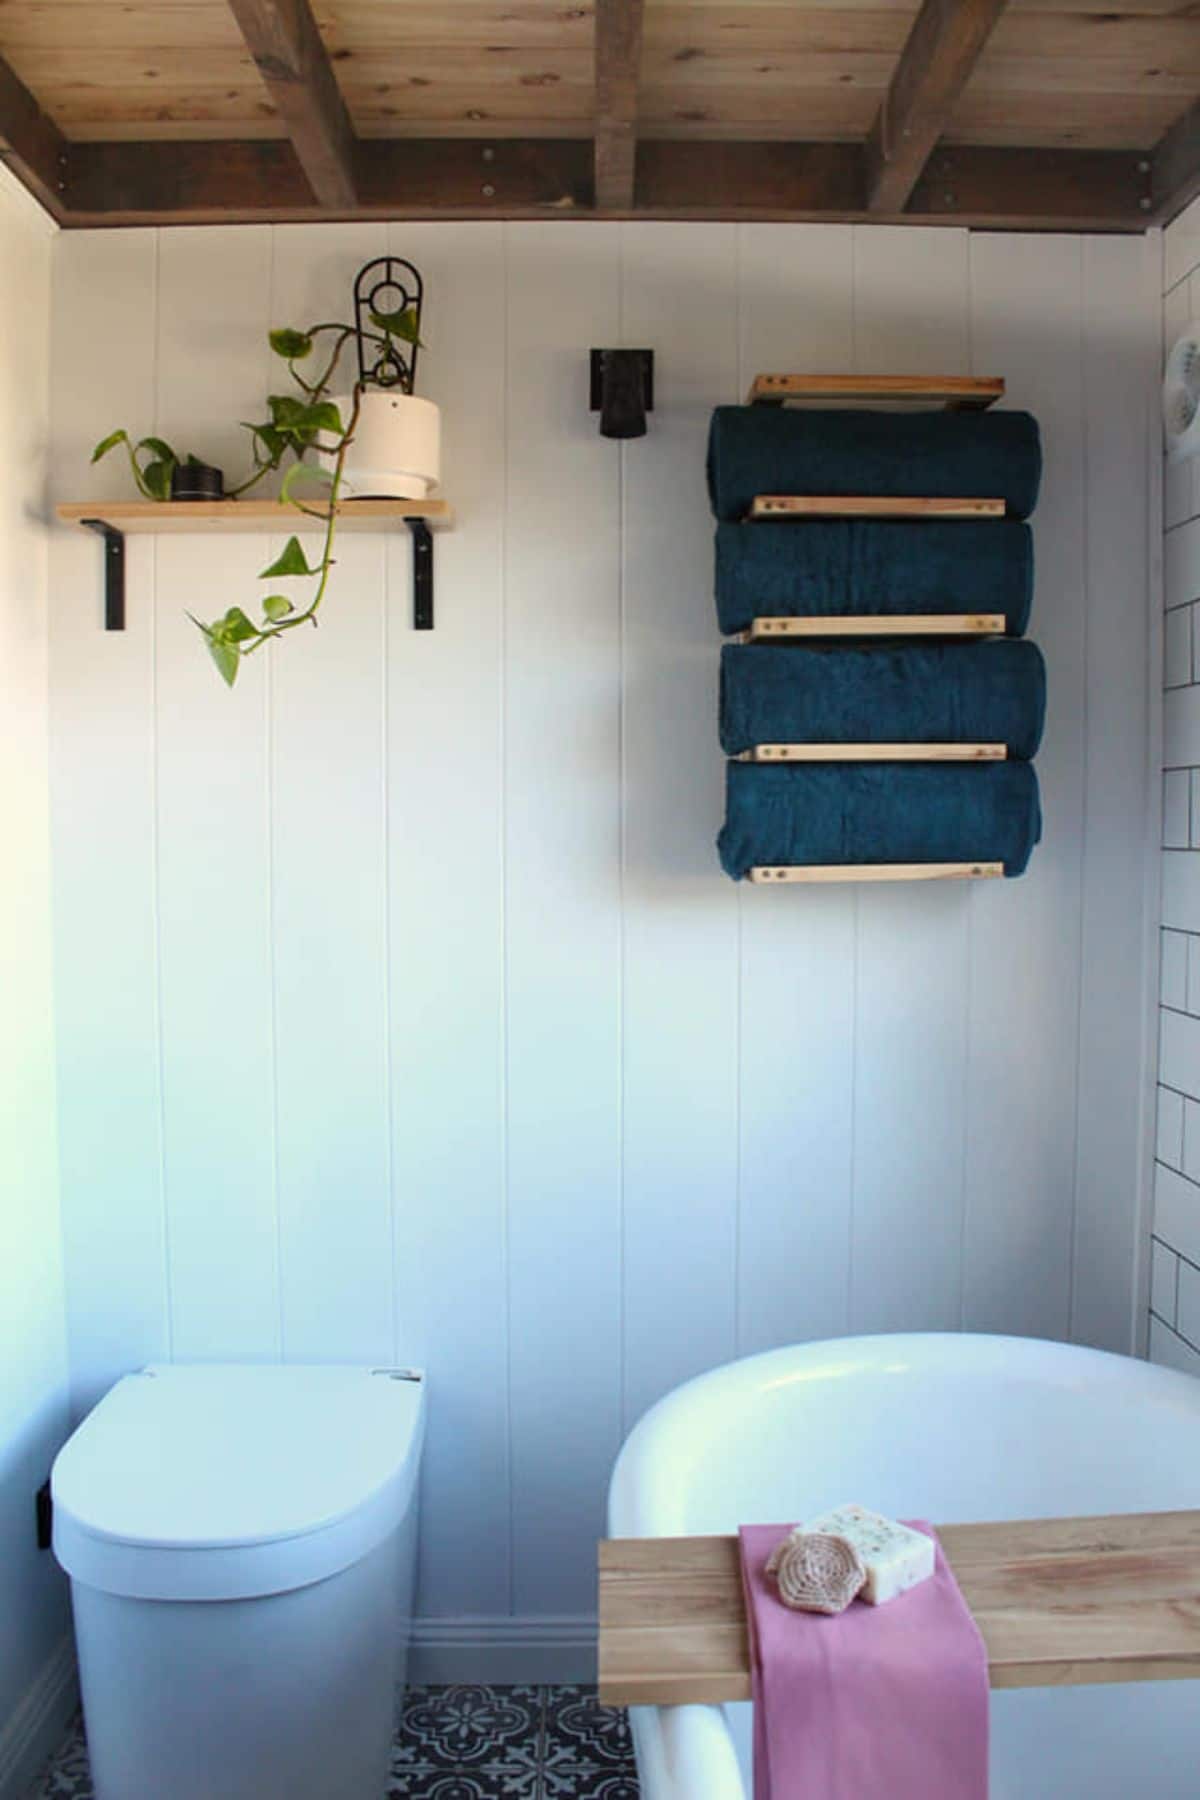 Bathroom of Handbuilt Modern Tiny Farmhouse has a standard toilet and wooden rack behind